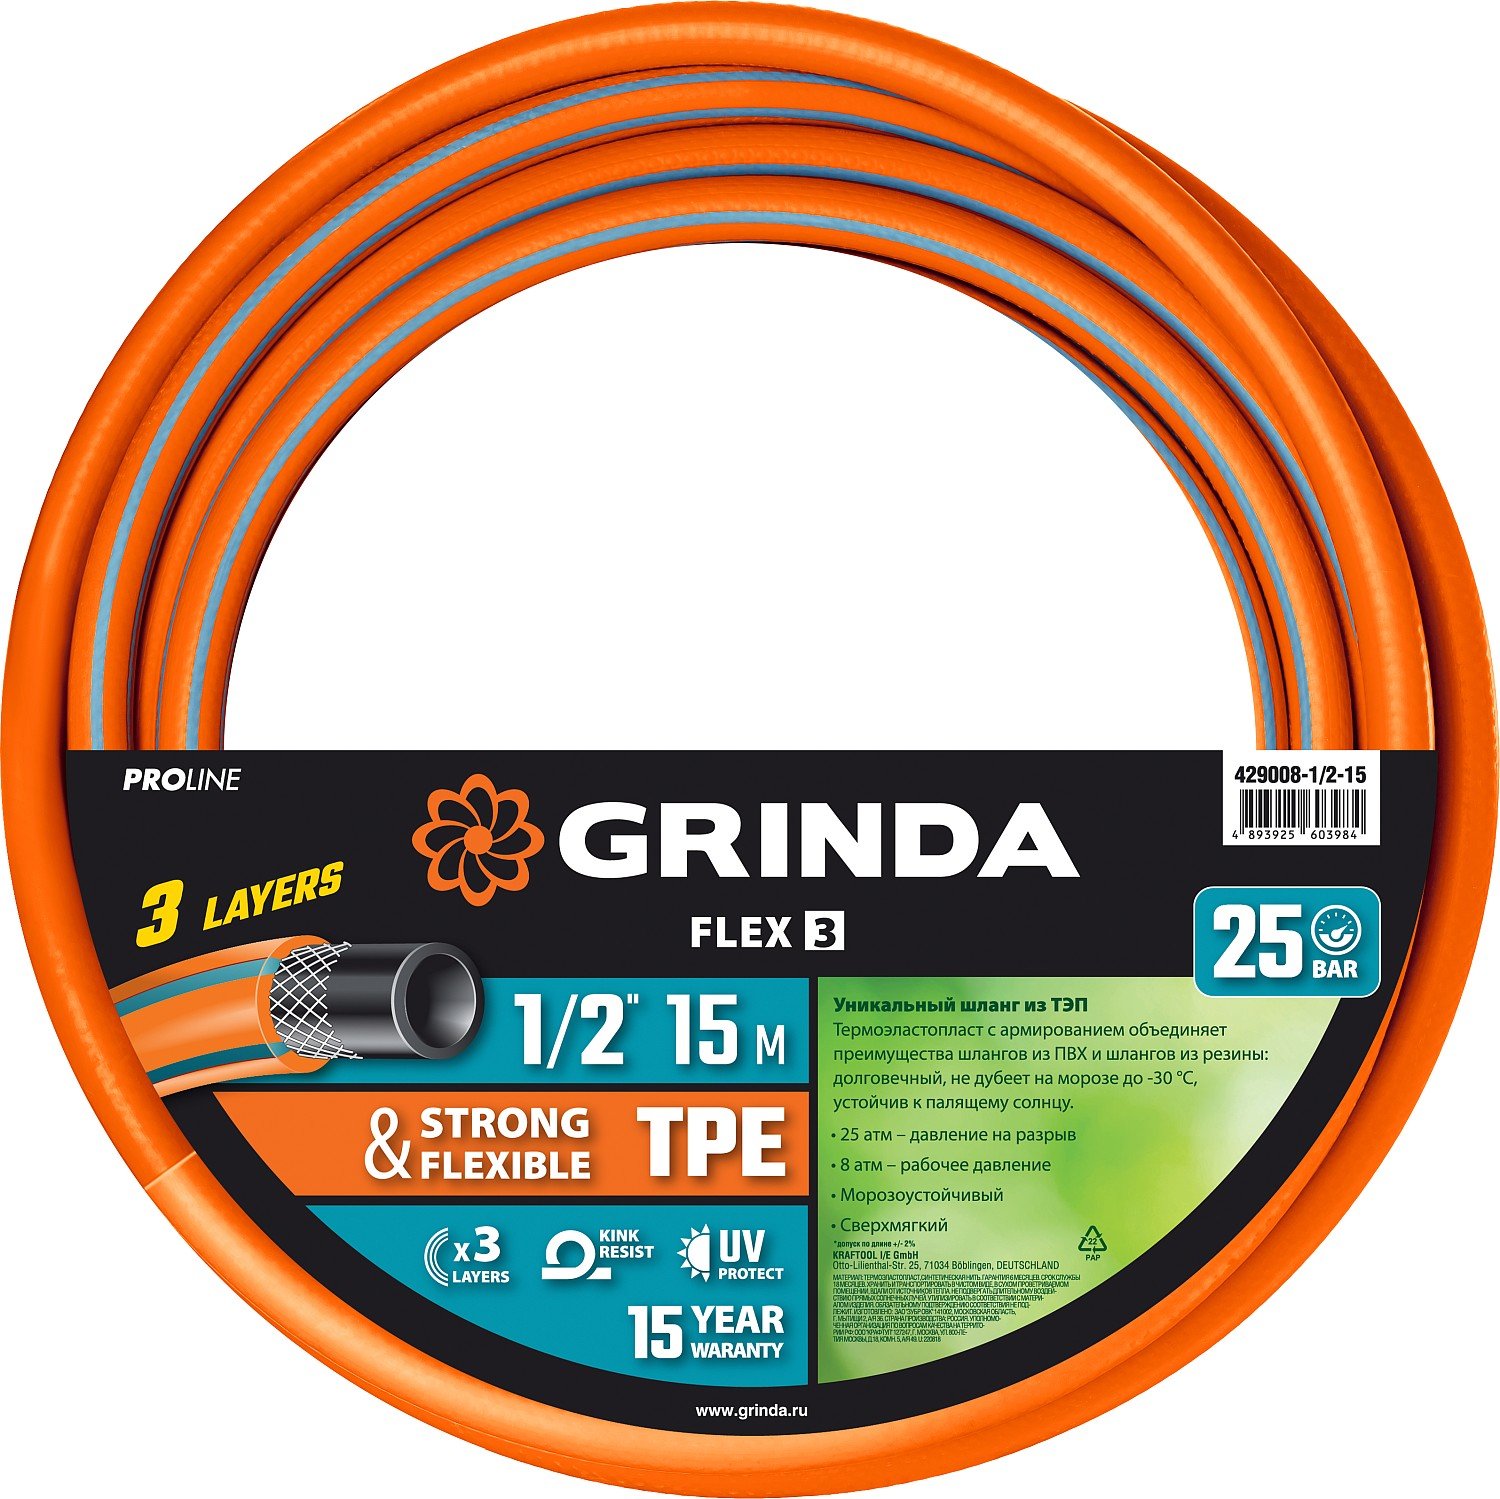   GRINDA PROLine FLEX 3 1 2 15  25      (429008-1 2-15)